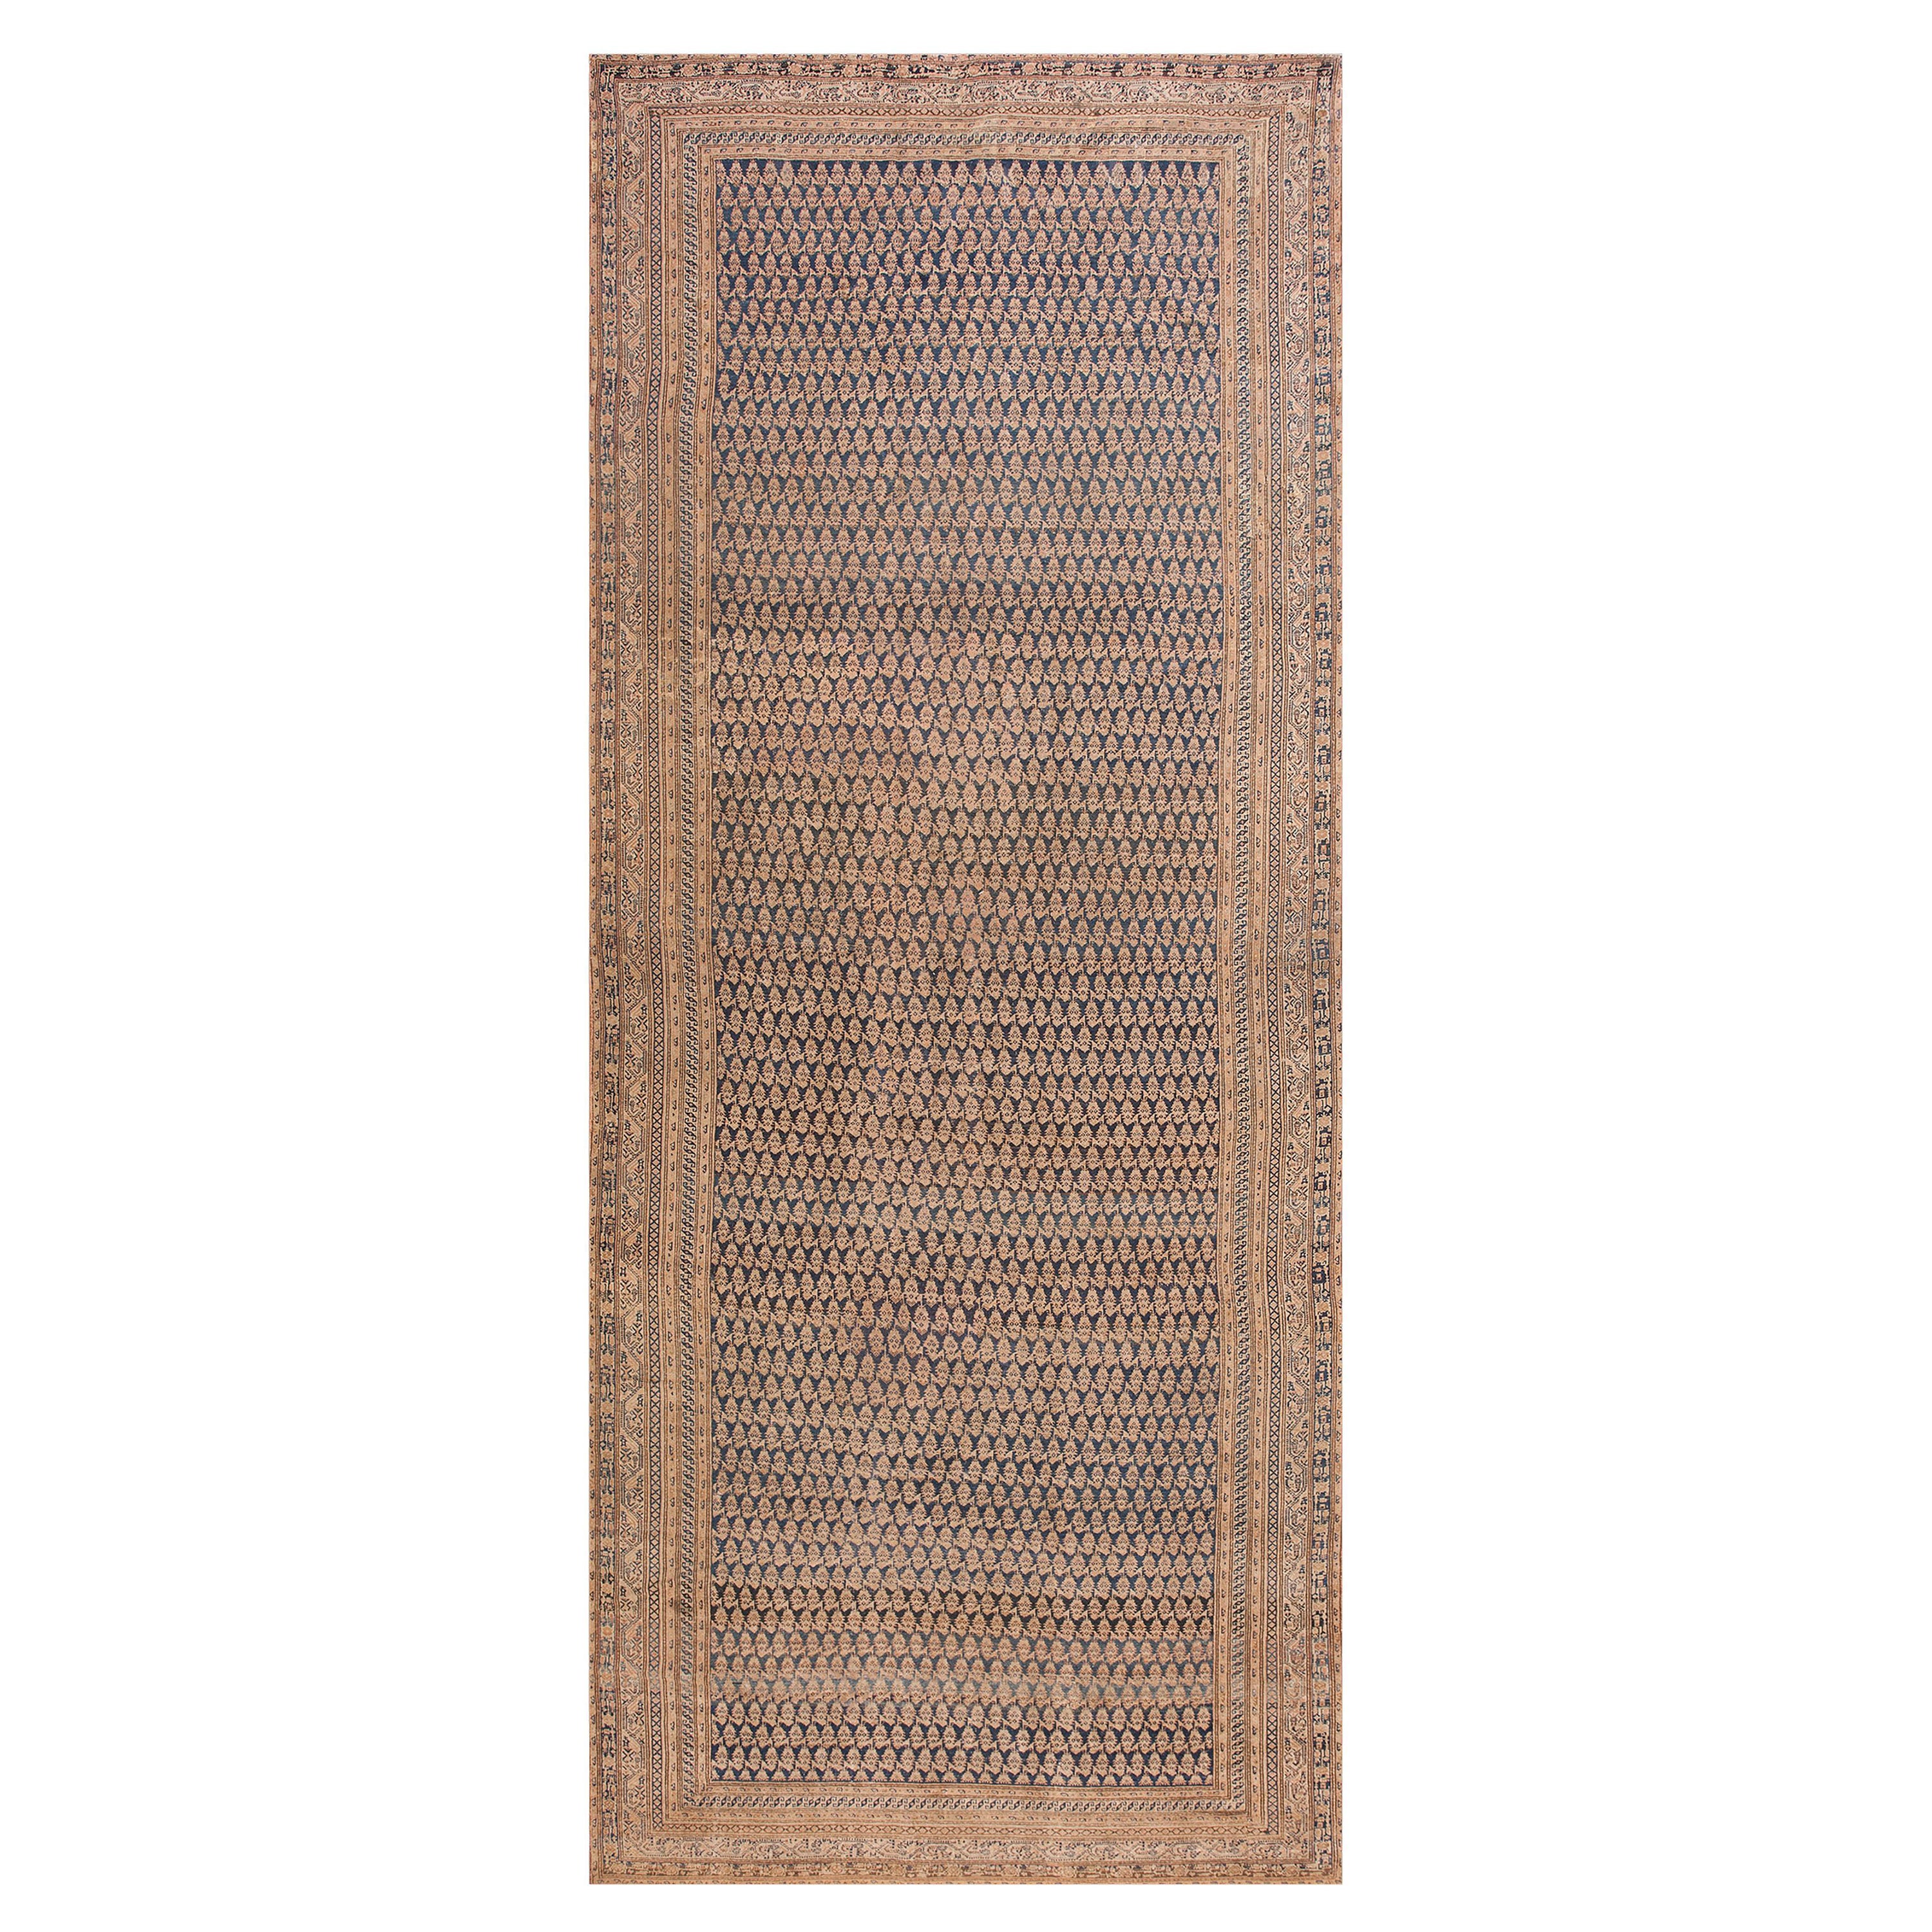 Early 20th Century Persian Malayer Carpet ( 6'4" x 15'6' - 193 x 472 )